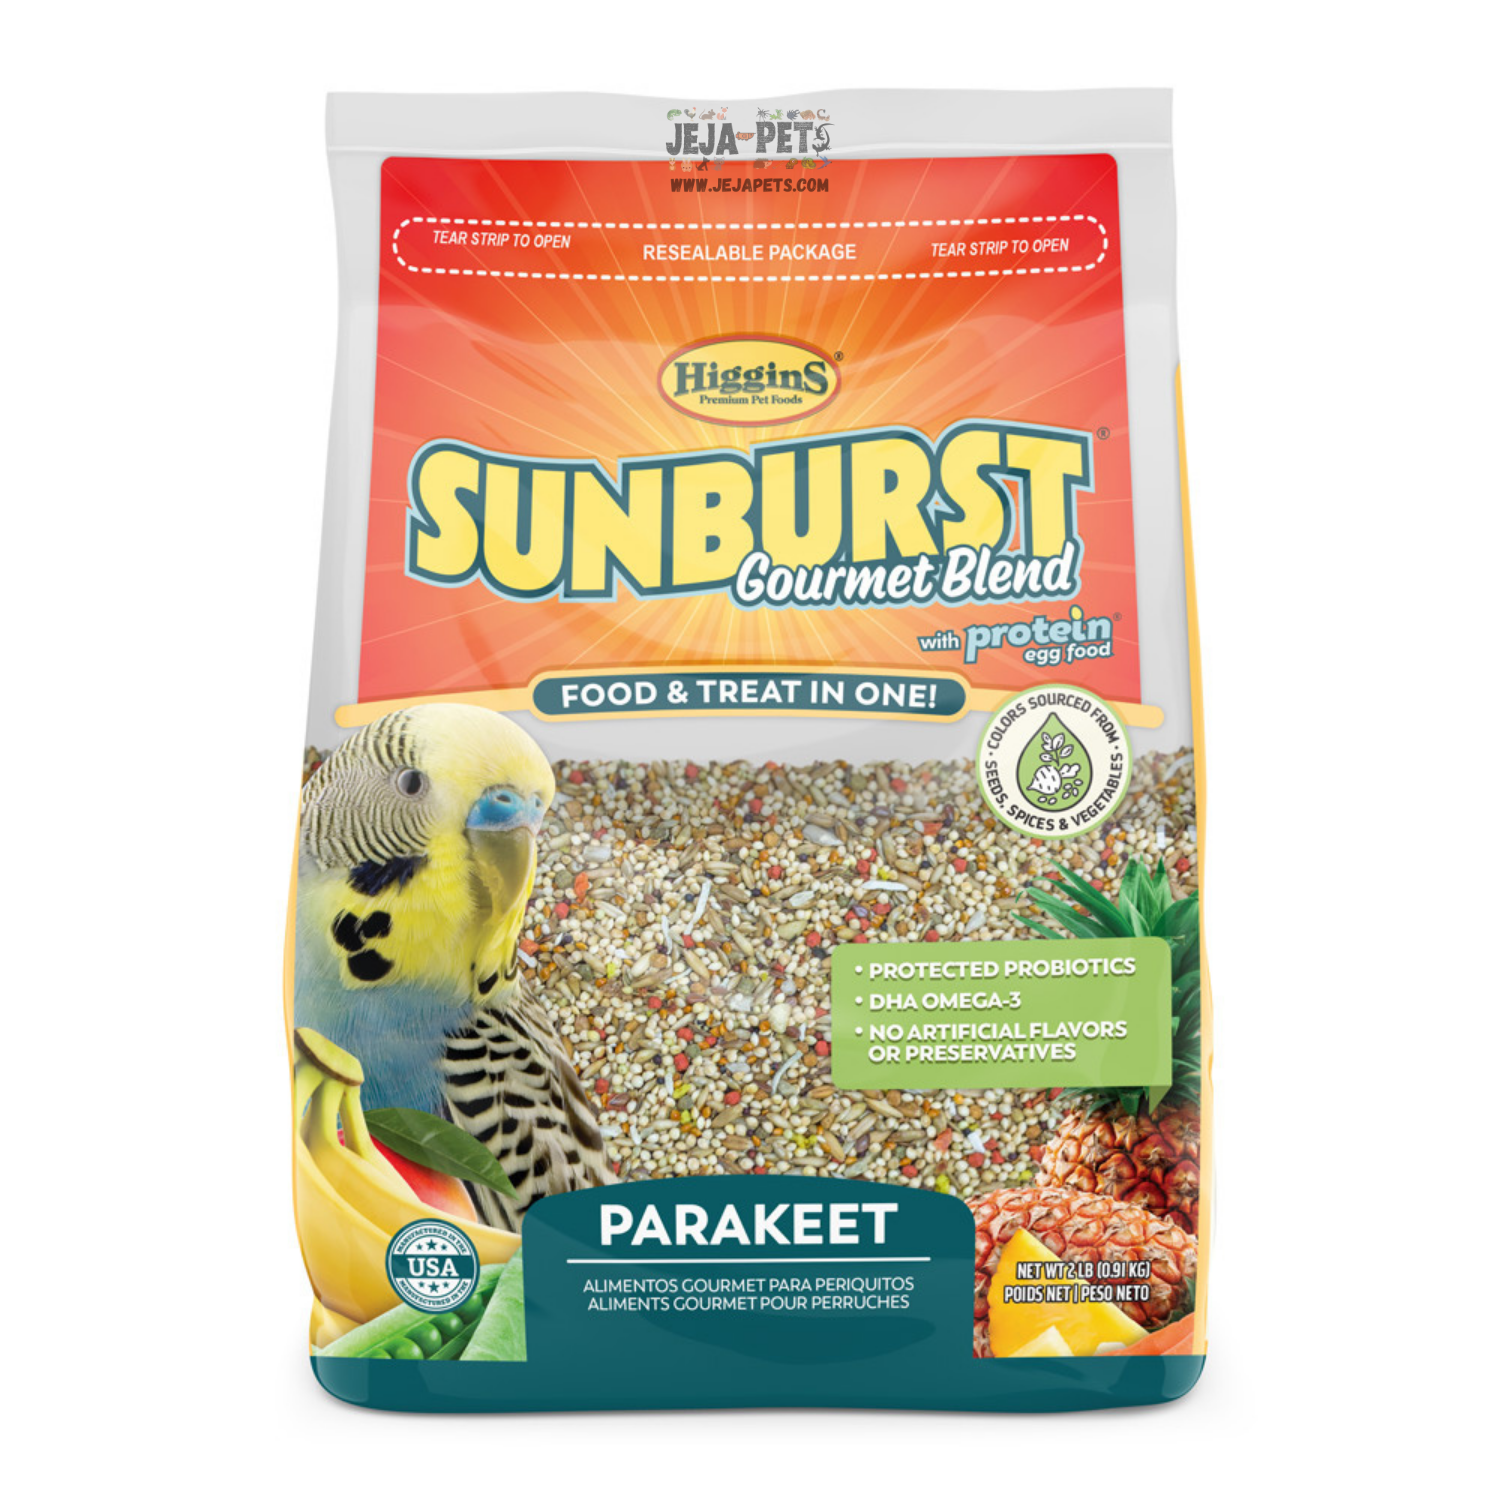 Higgins Sunburst® Gourmet Blend Parakeet - 907g